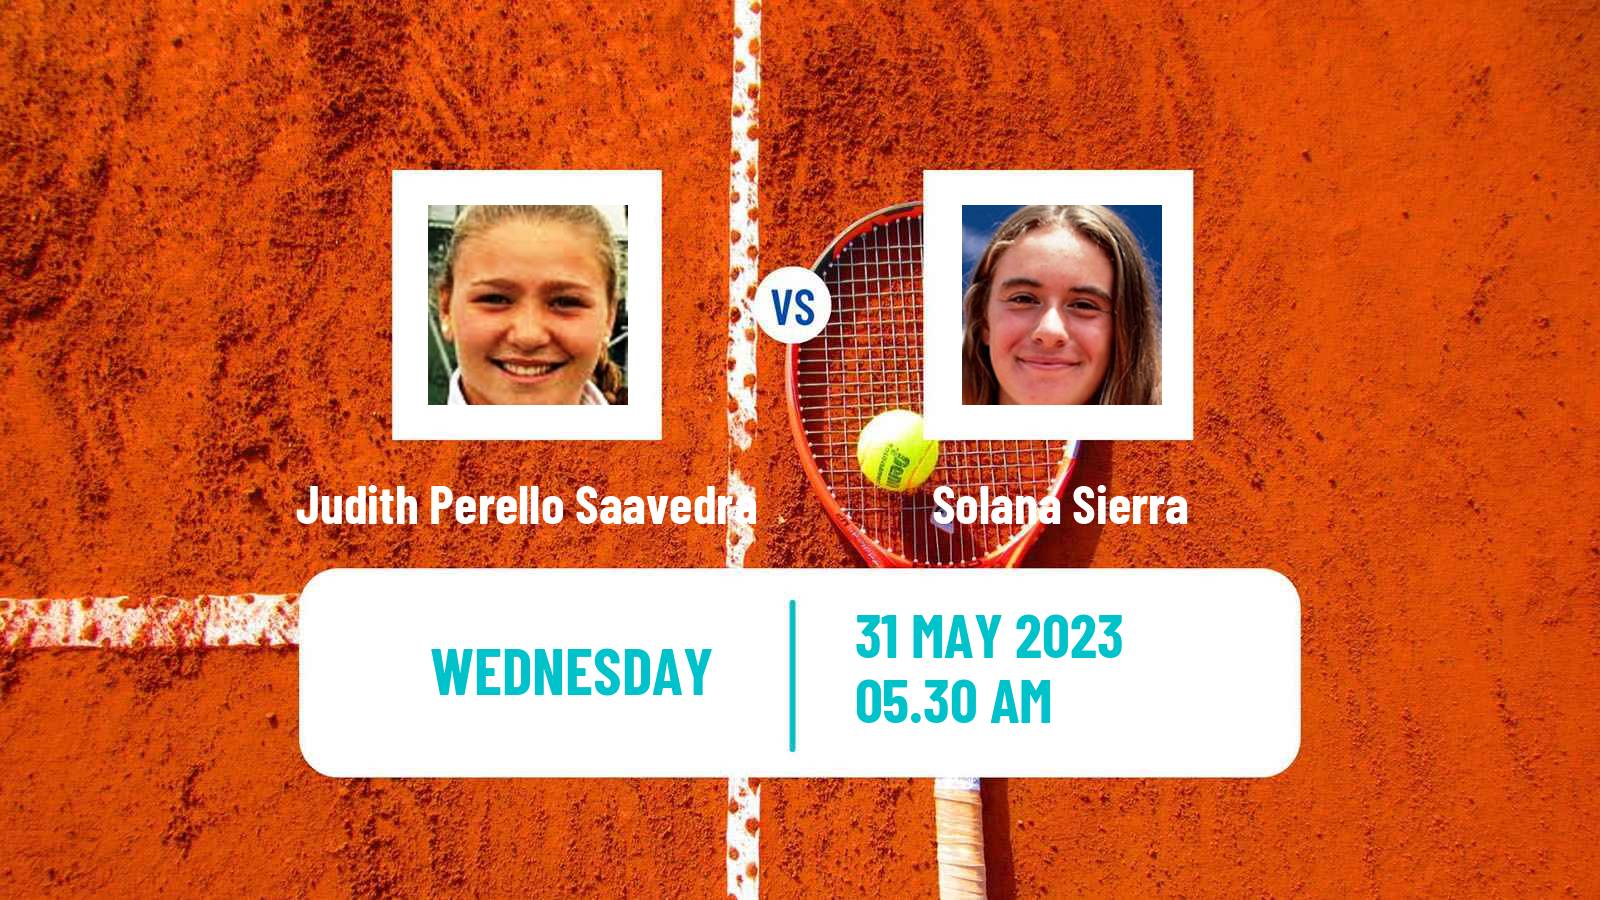 Tennis ITF W25 Yecla Women Judith Perello Saavedra - Solana Sierra